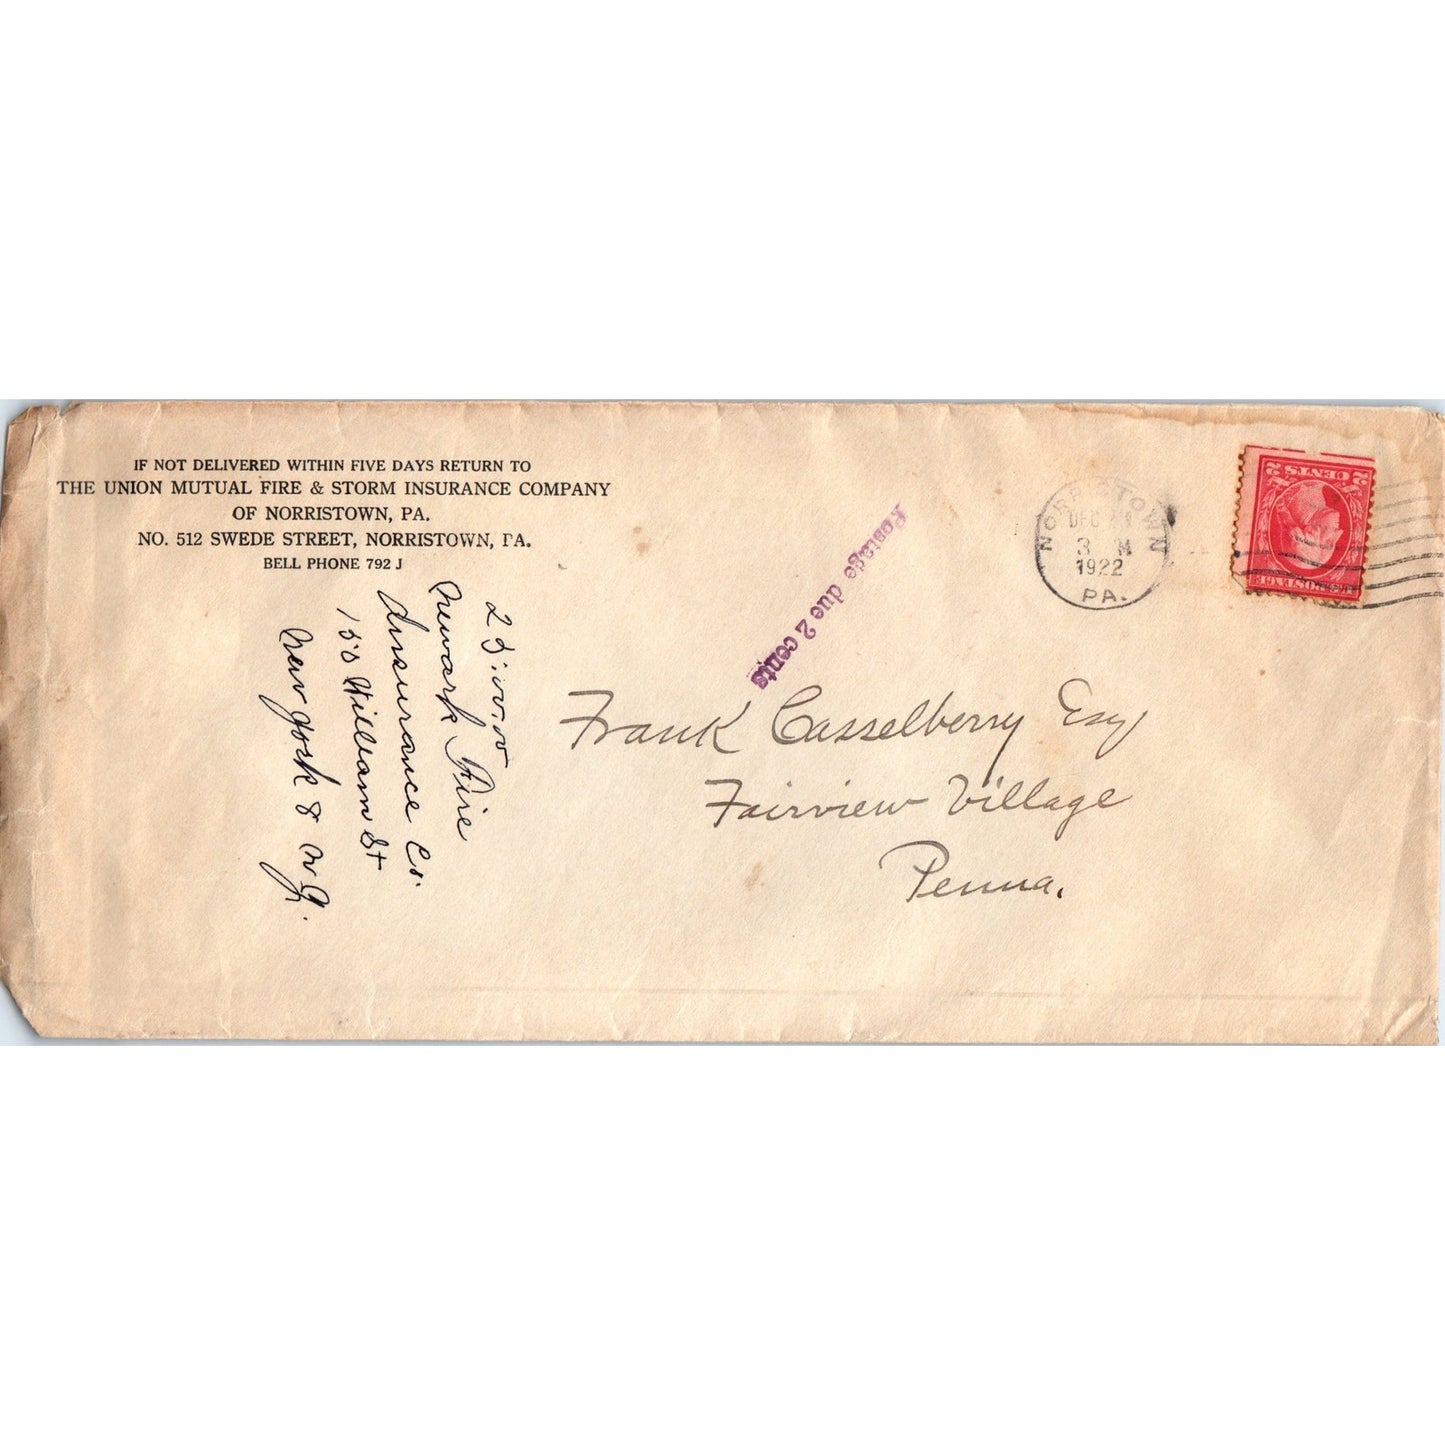 1922 Frank Casselberry Esq Fairview Village PA Postal Cover Envelope TH9-L1